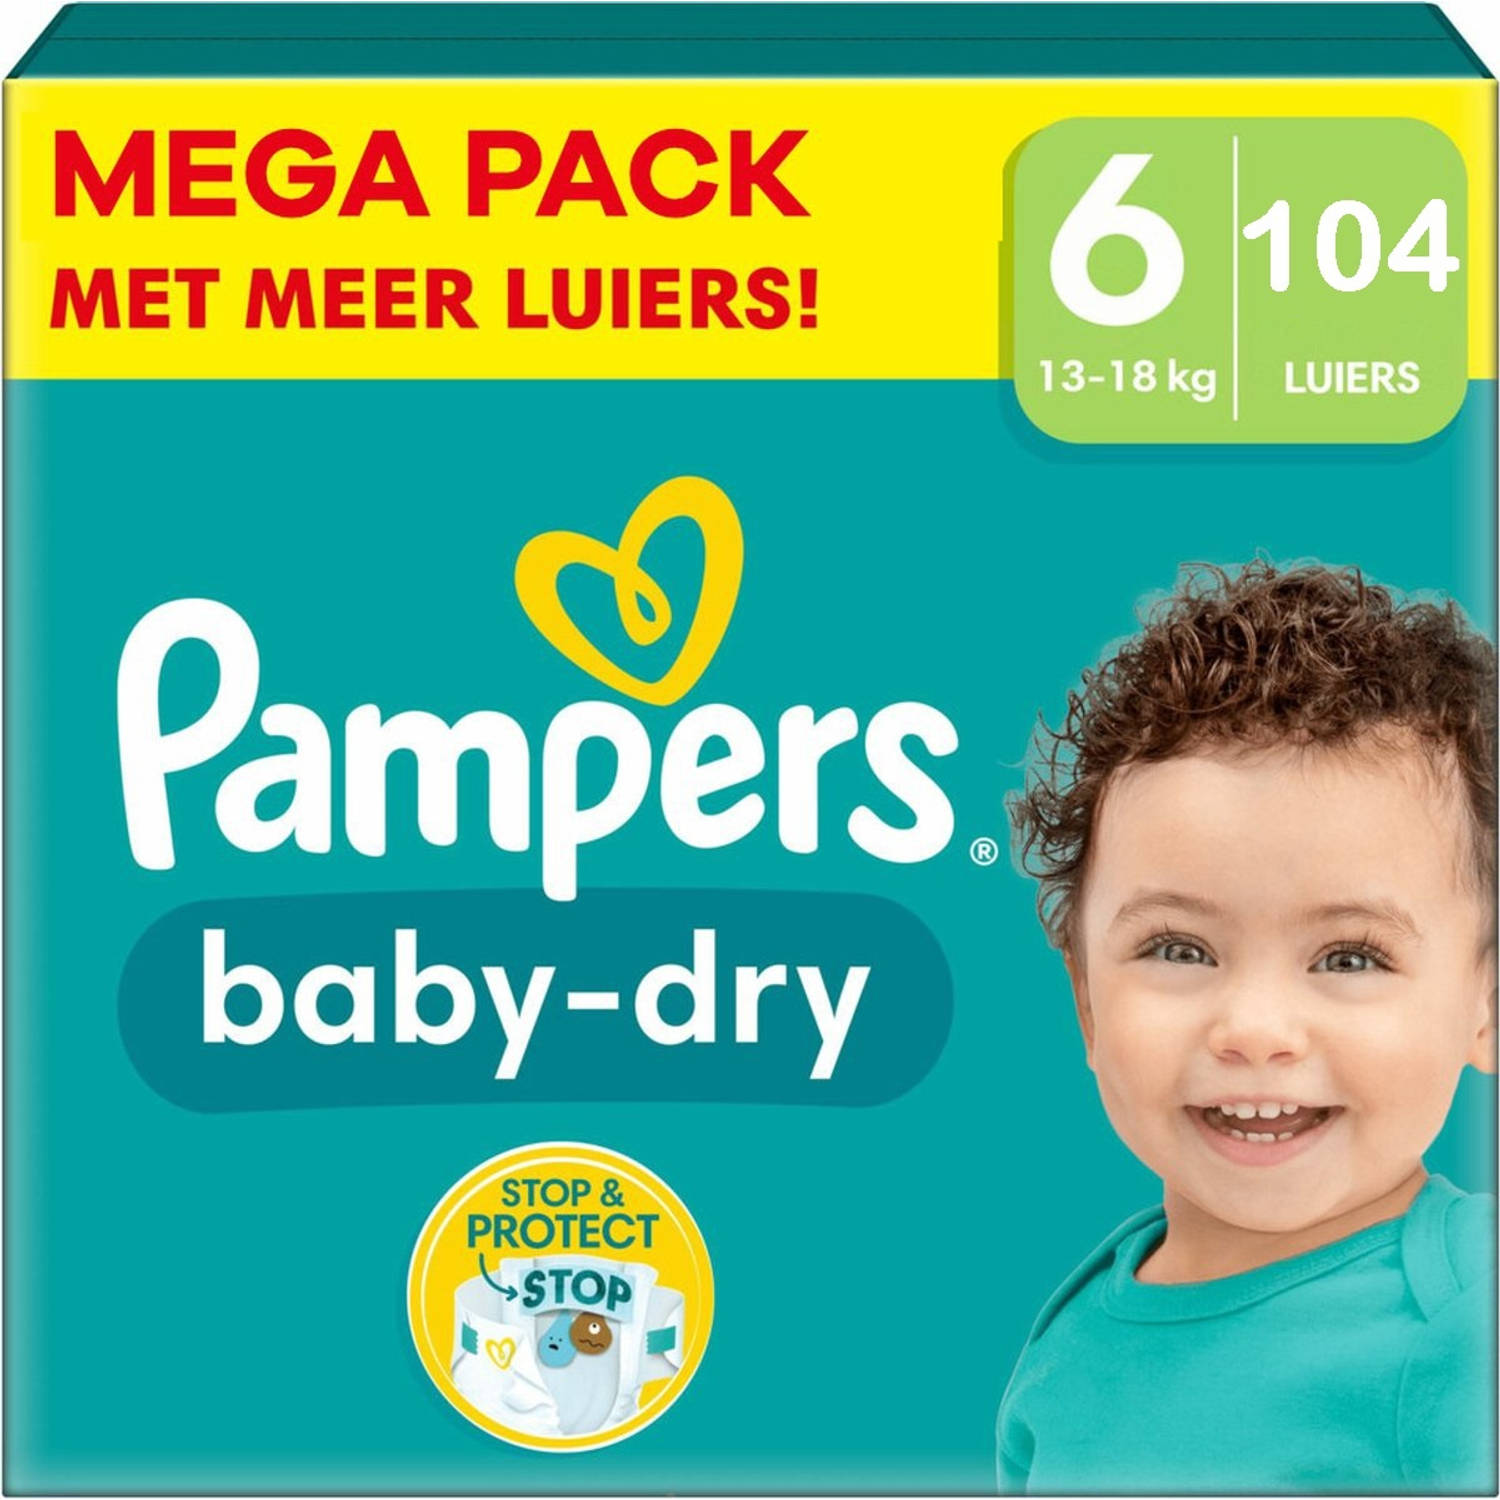 Pampers Baby-Dry maat 6 (13-18kg) - 104 luiers - Voordeelverpakking